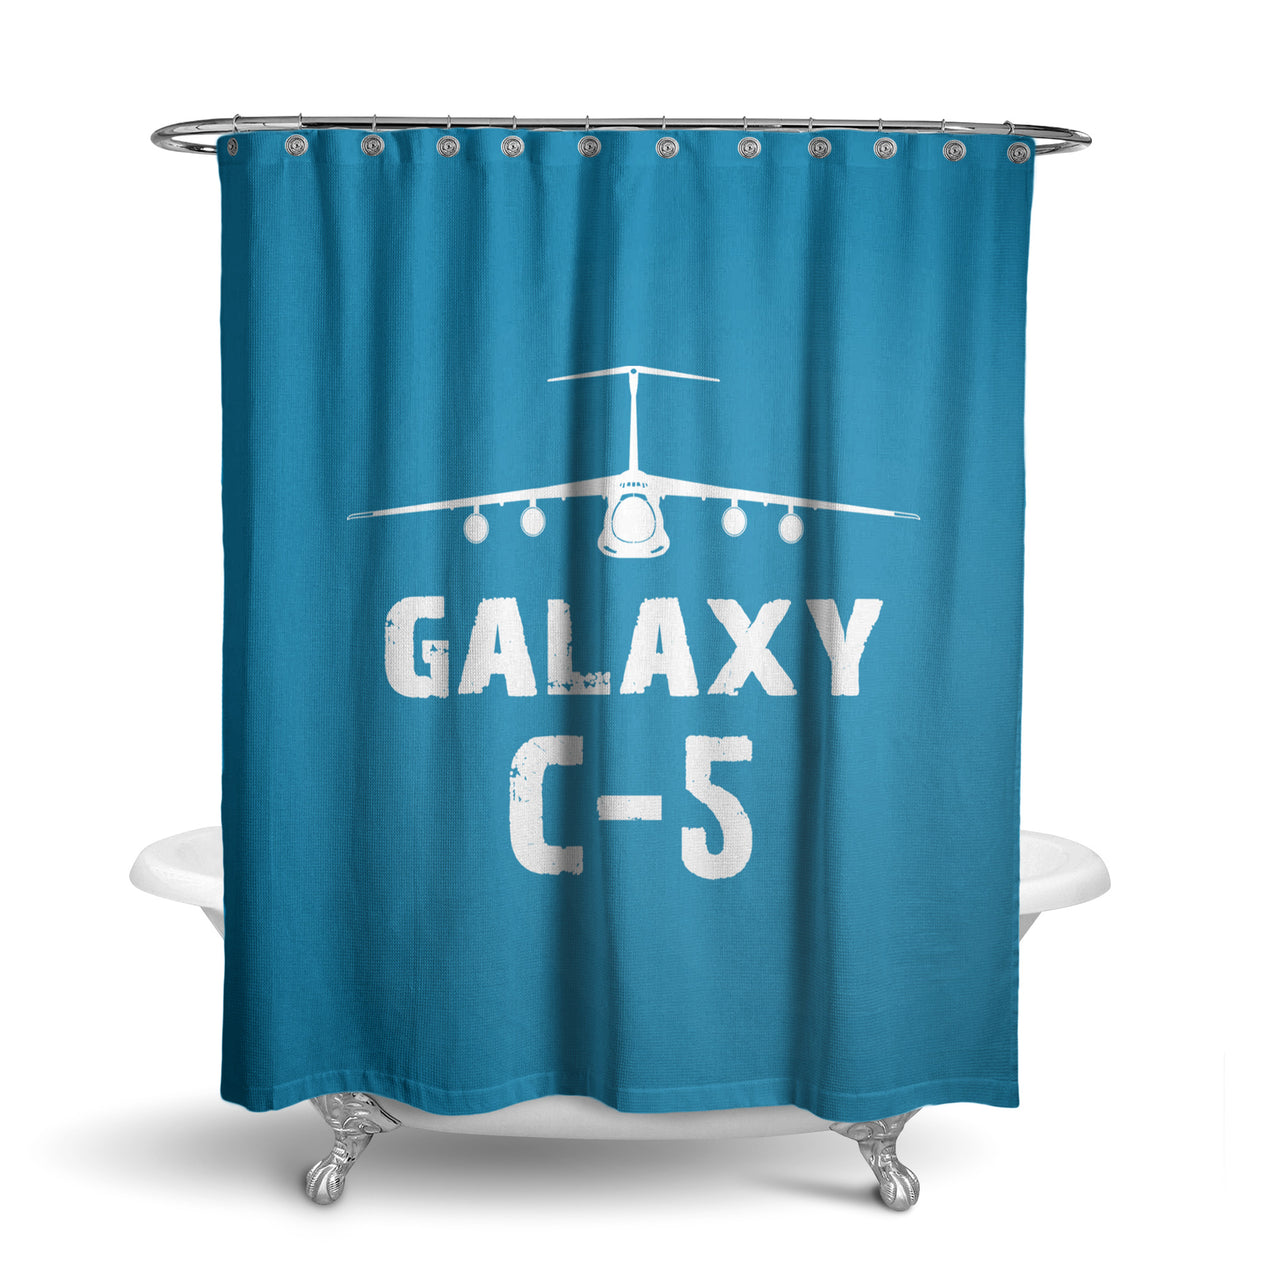 Galaxy C-5 & Plane Designed Shower Curtains